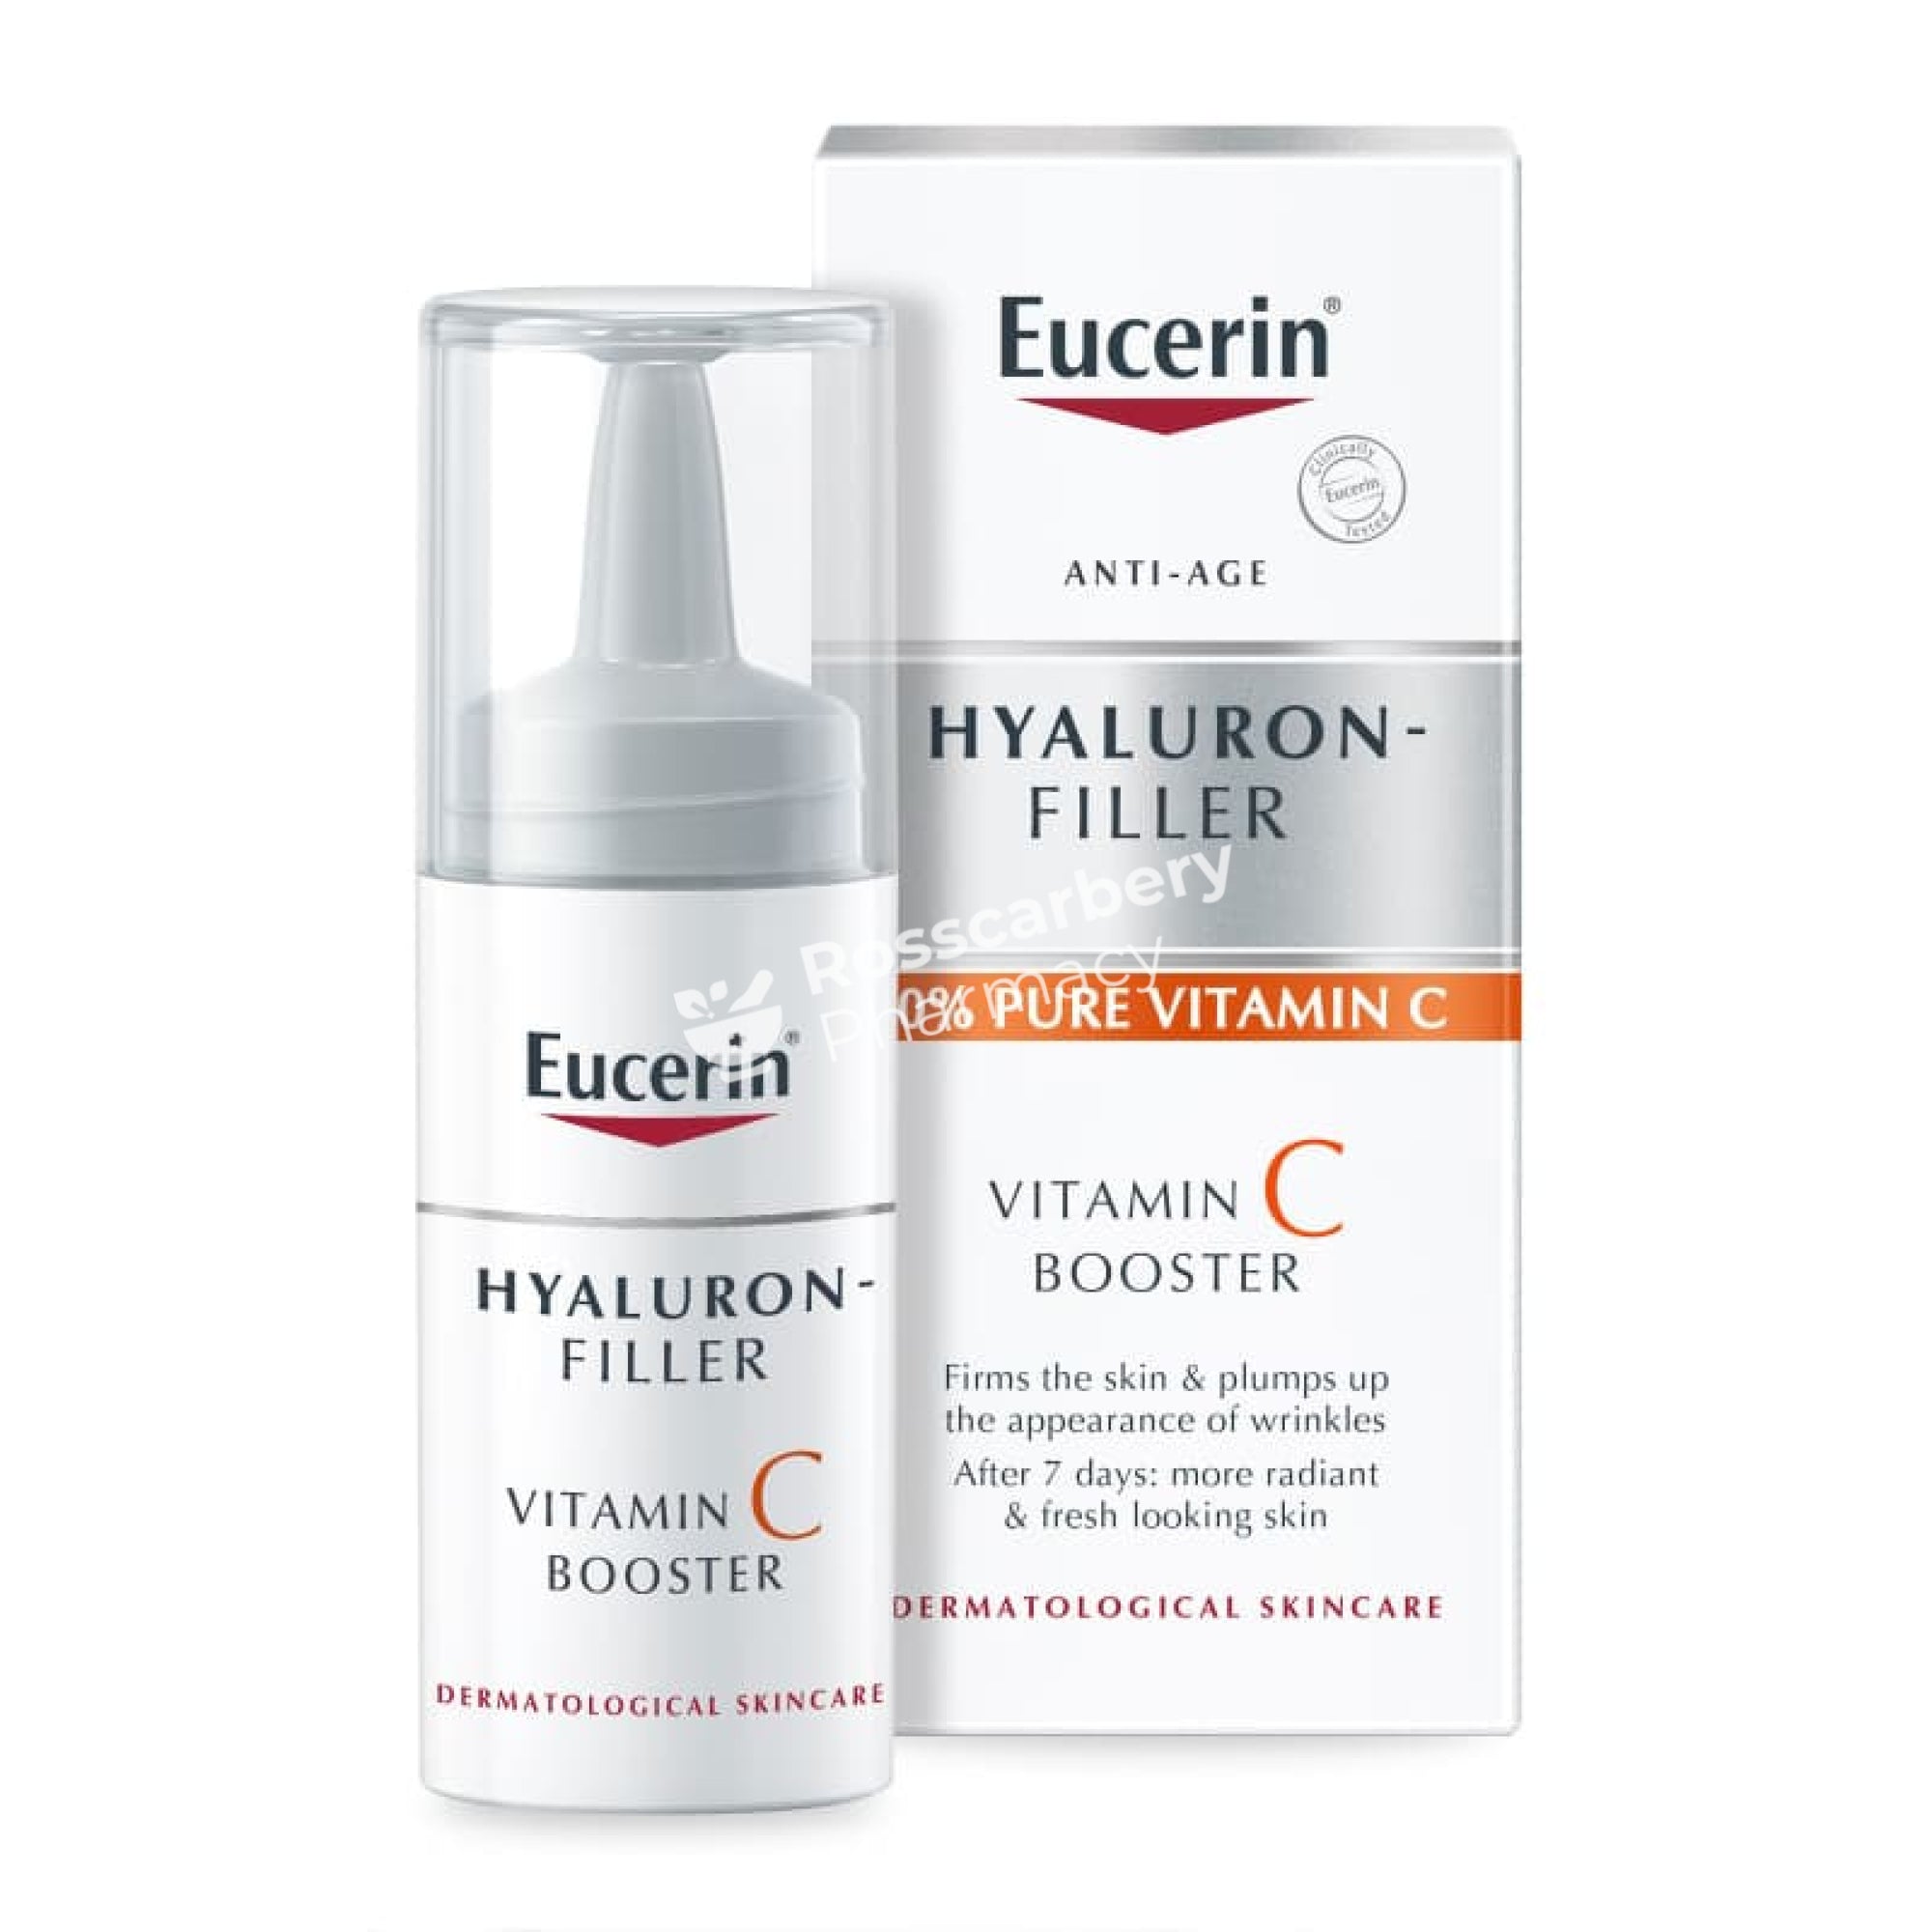 Eucerin Hyaluron-Filler Vitamin C Booster Serum & Oils